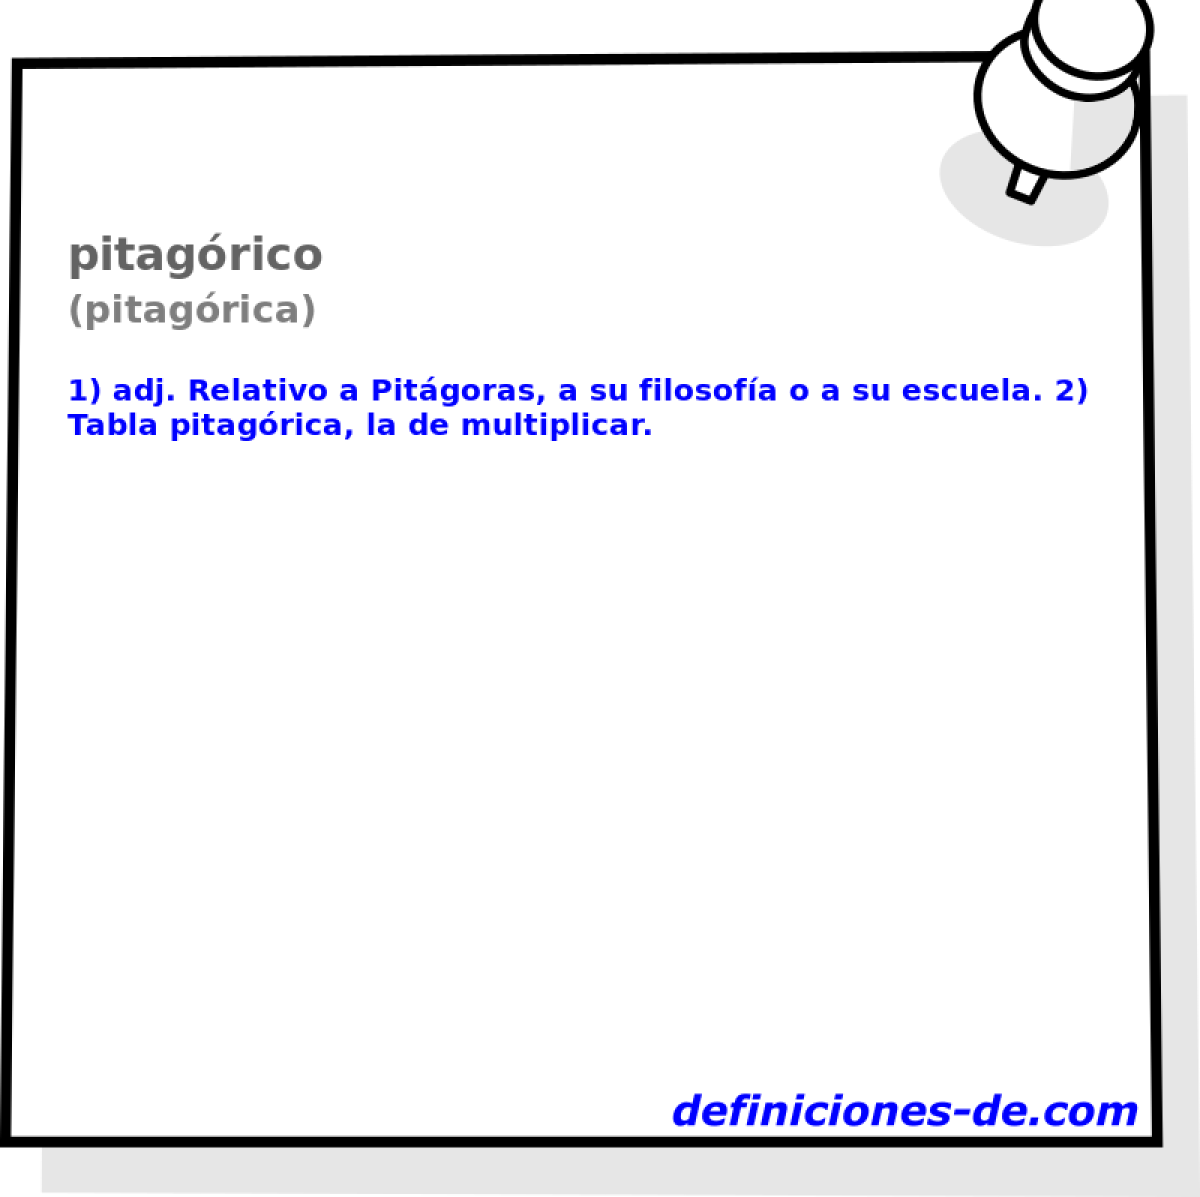 pitagrico (pitagrica)